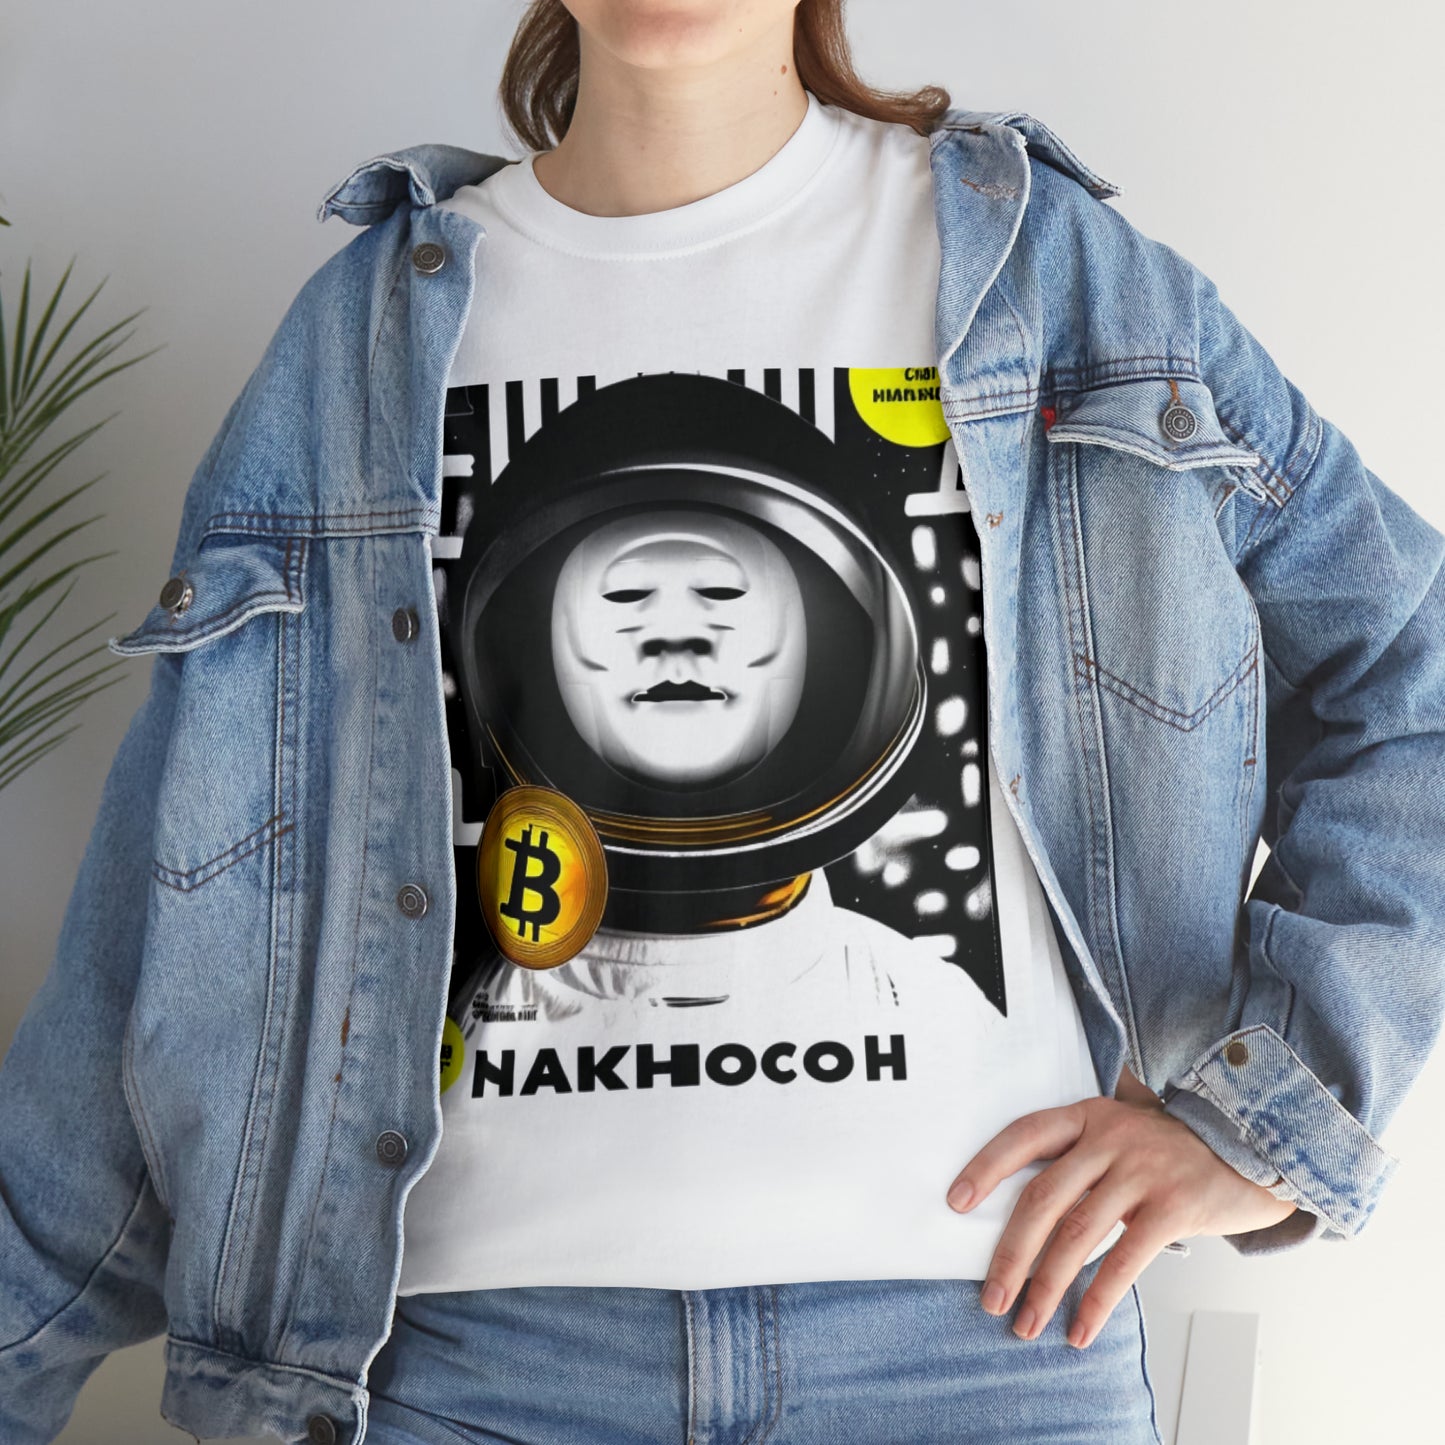 Bitcoin’s Surreal Symphony